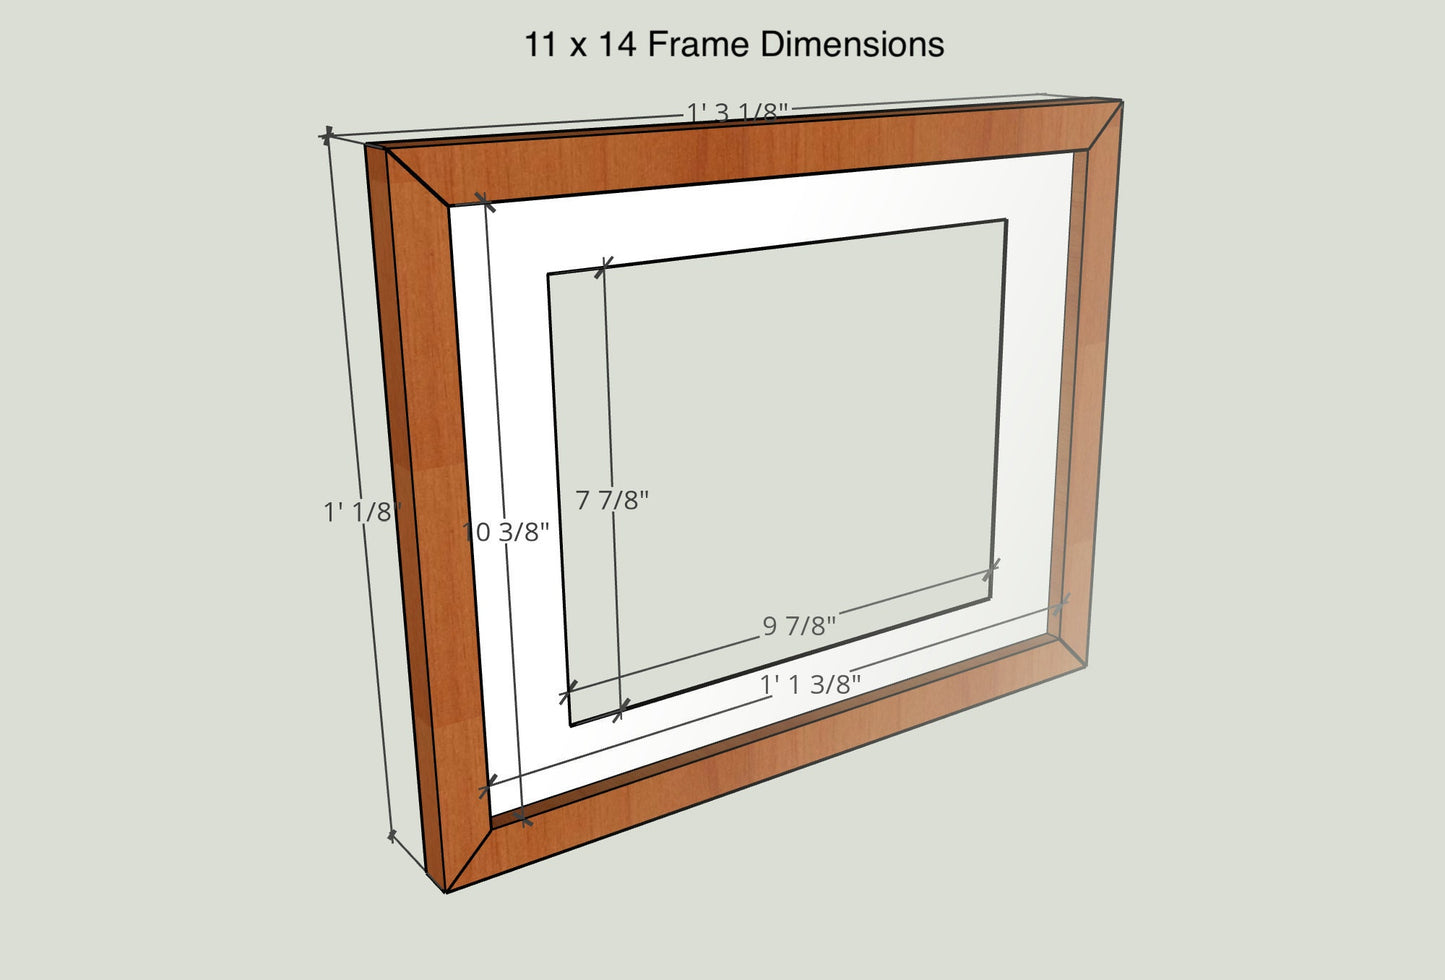 Butternut Hardwood Gallery Frame - Minimalist Profile - Picture Frame | Natural Wood Frame